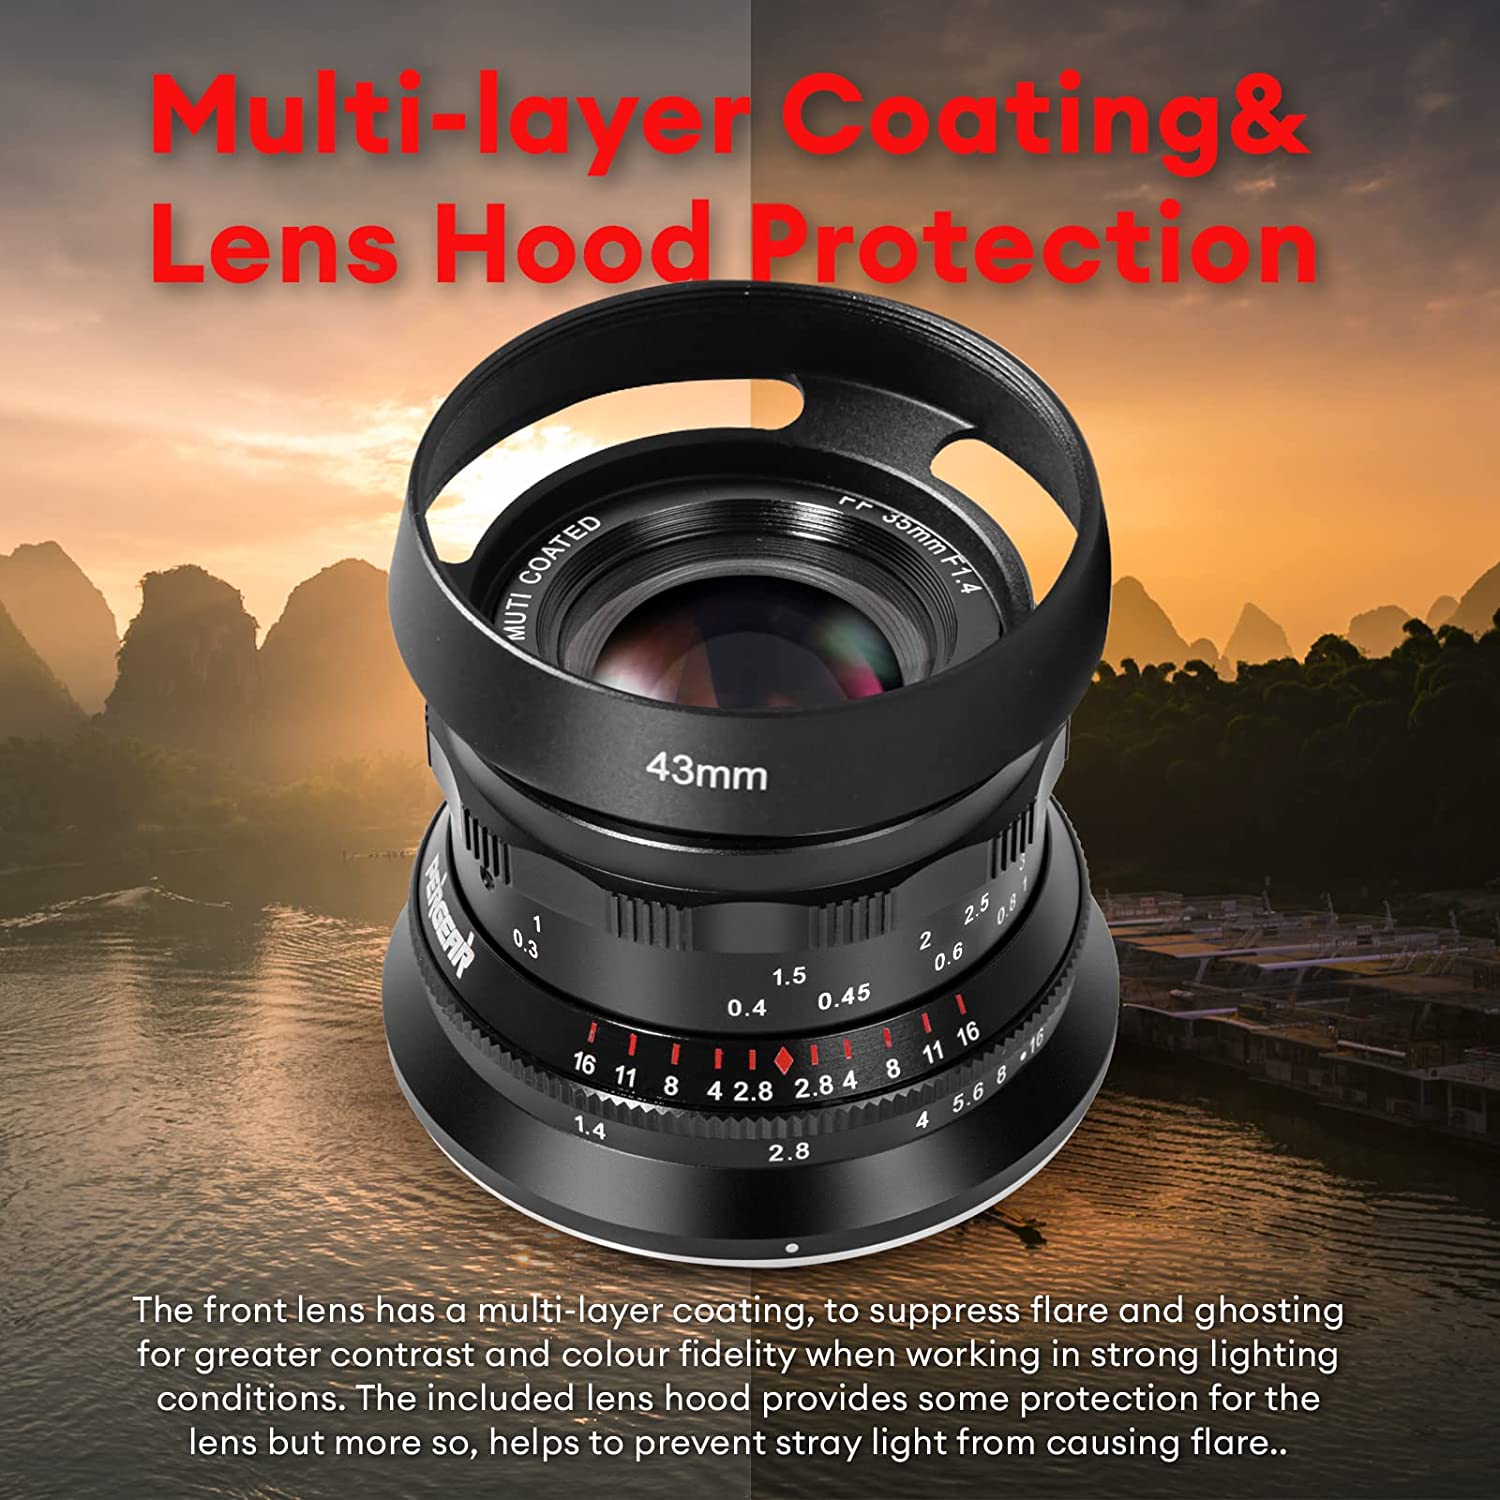 This new Pergear 35mm f/1.4 full-frame mirrorless lens for Nikon Z 